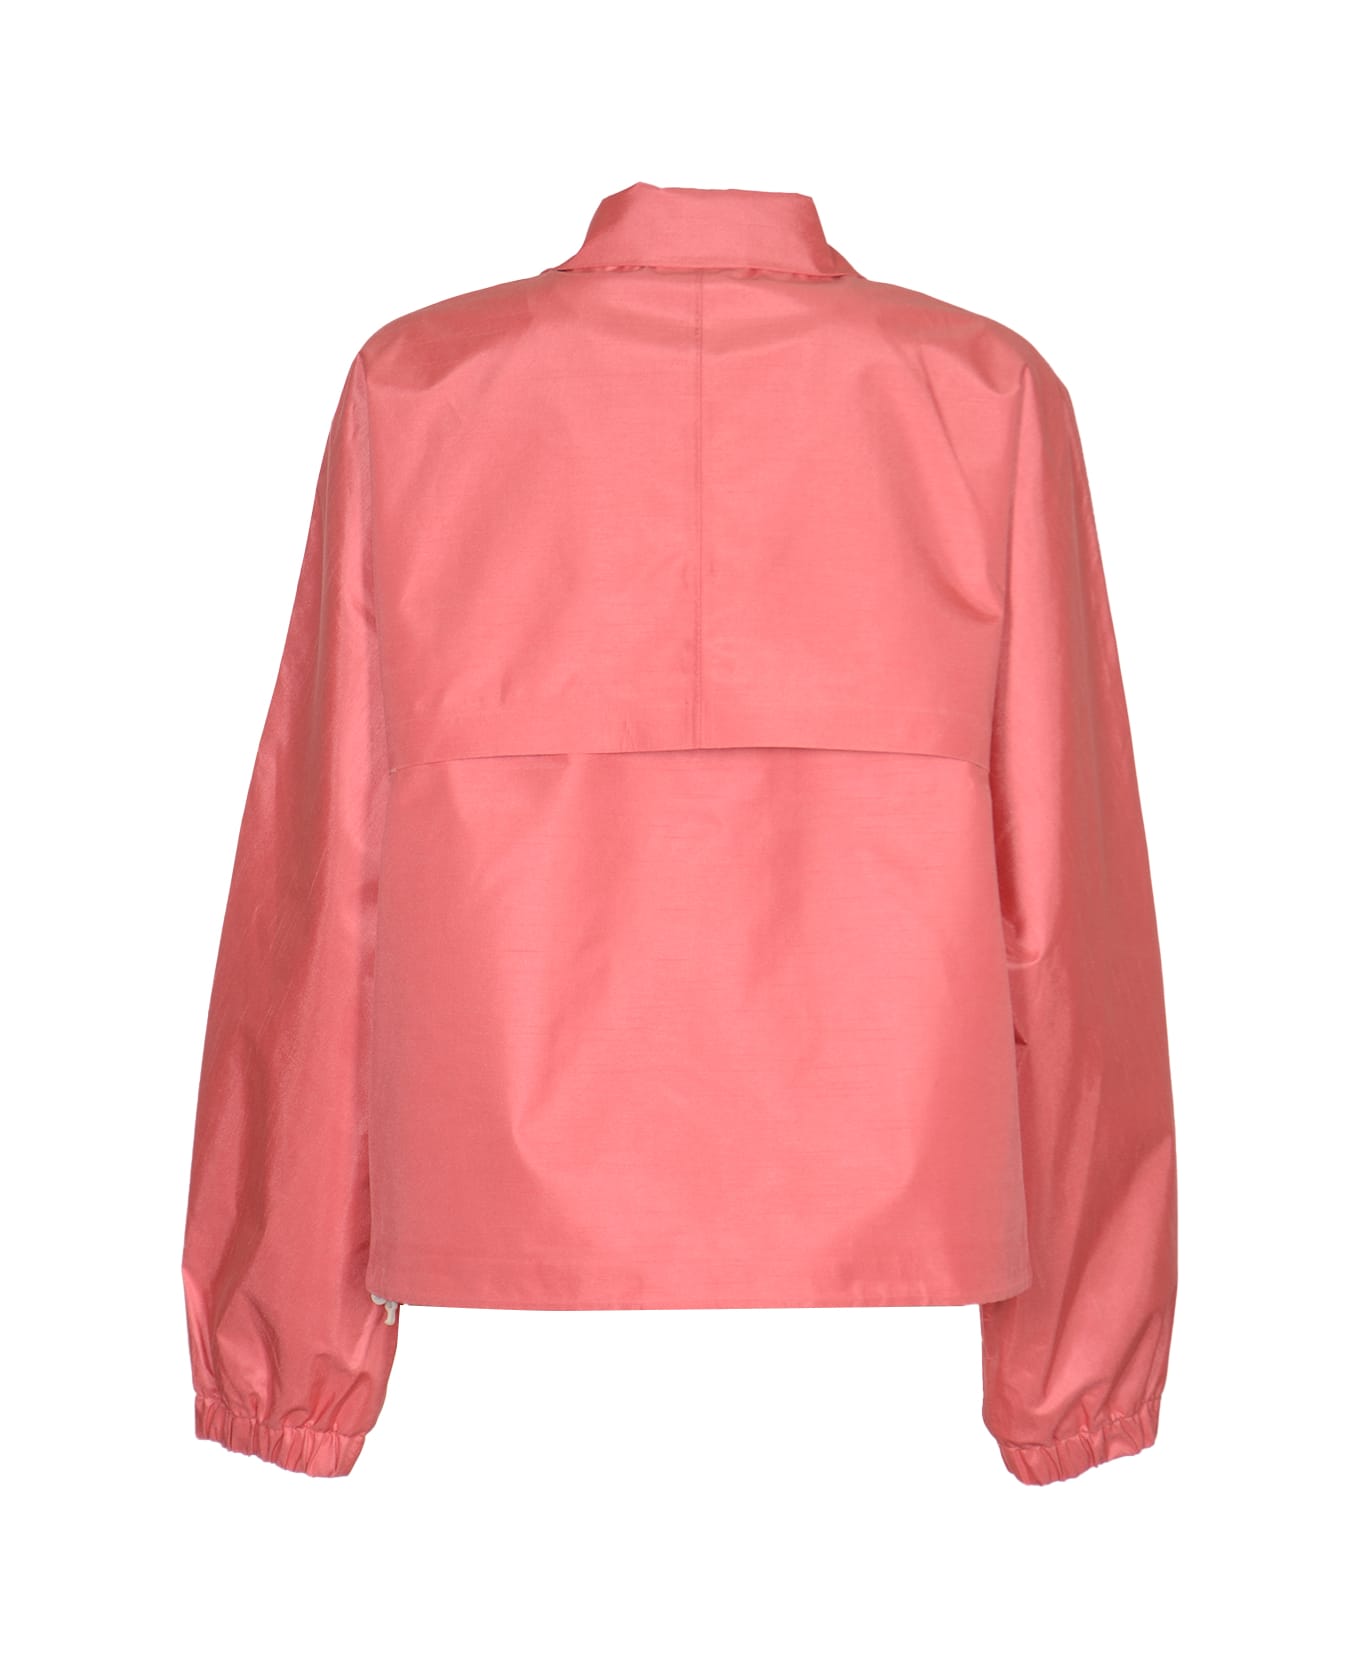 K-Way Soisir Coat - Pink/Camel